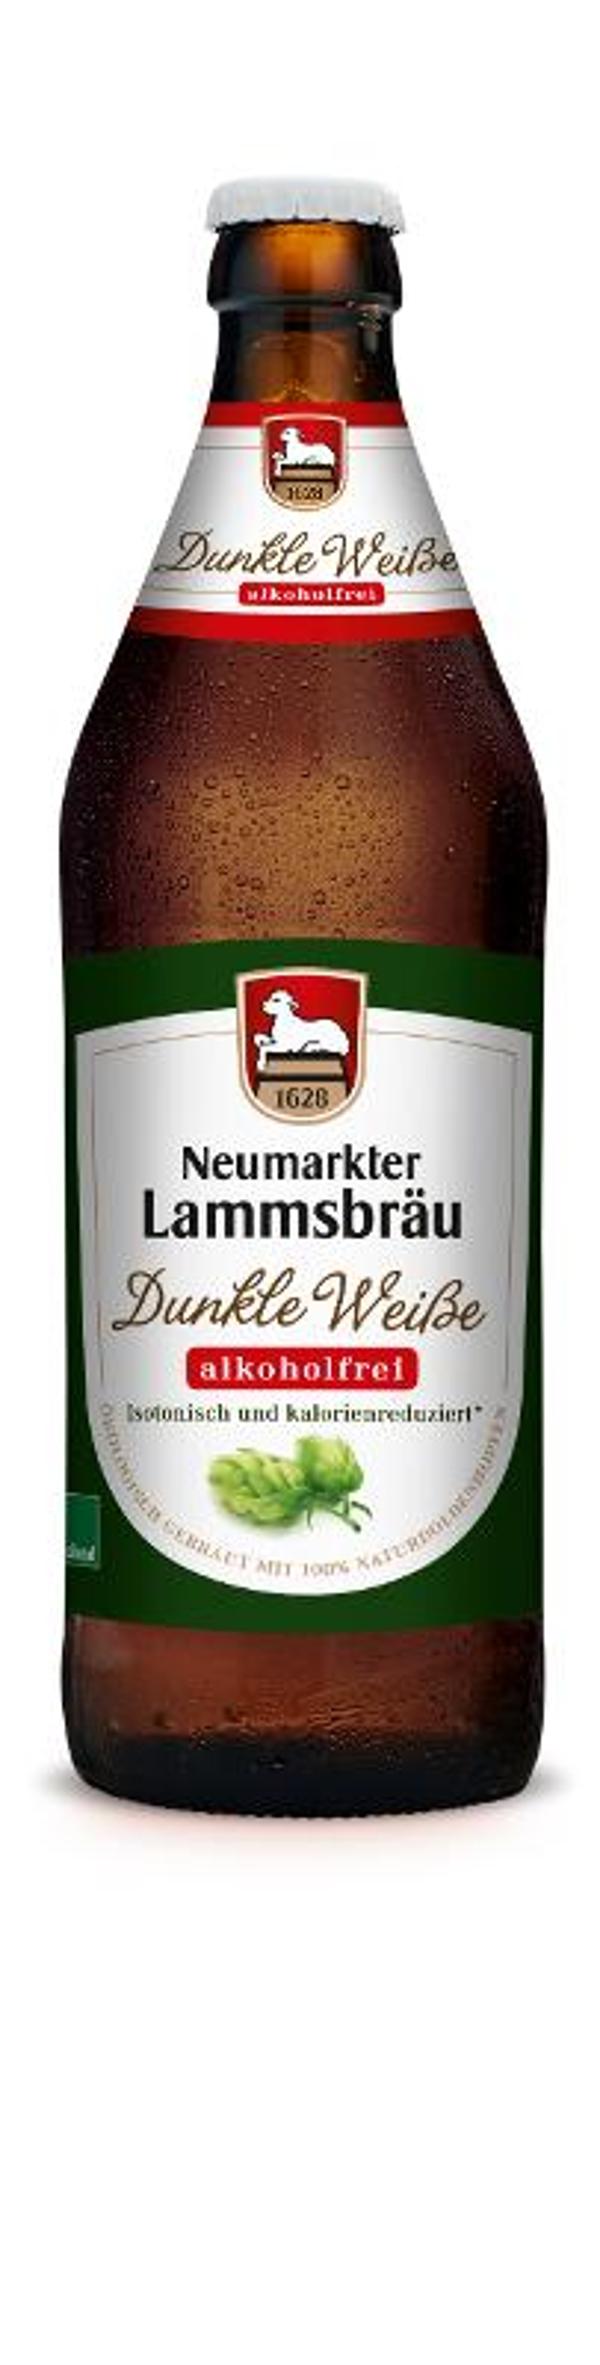 Produktfoto zu Lammsbräu Dunkle Weisse alkoholfrei 0,5